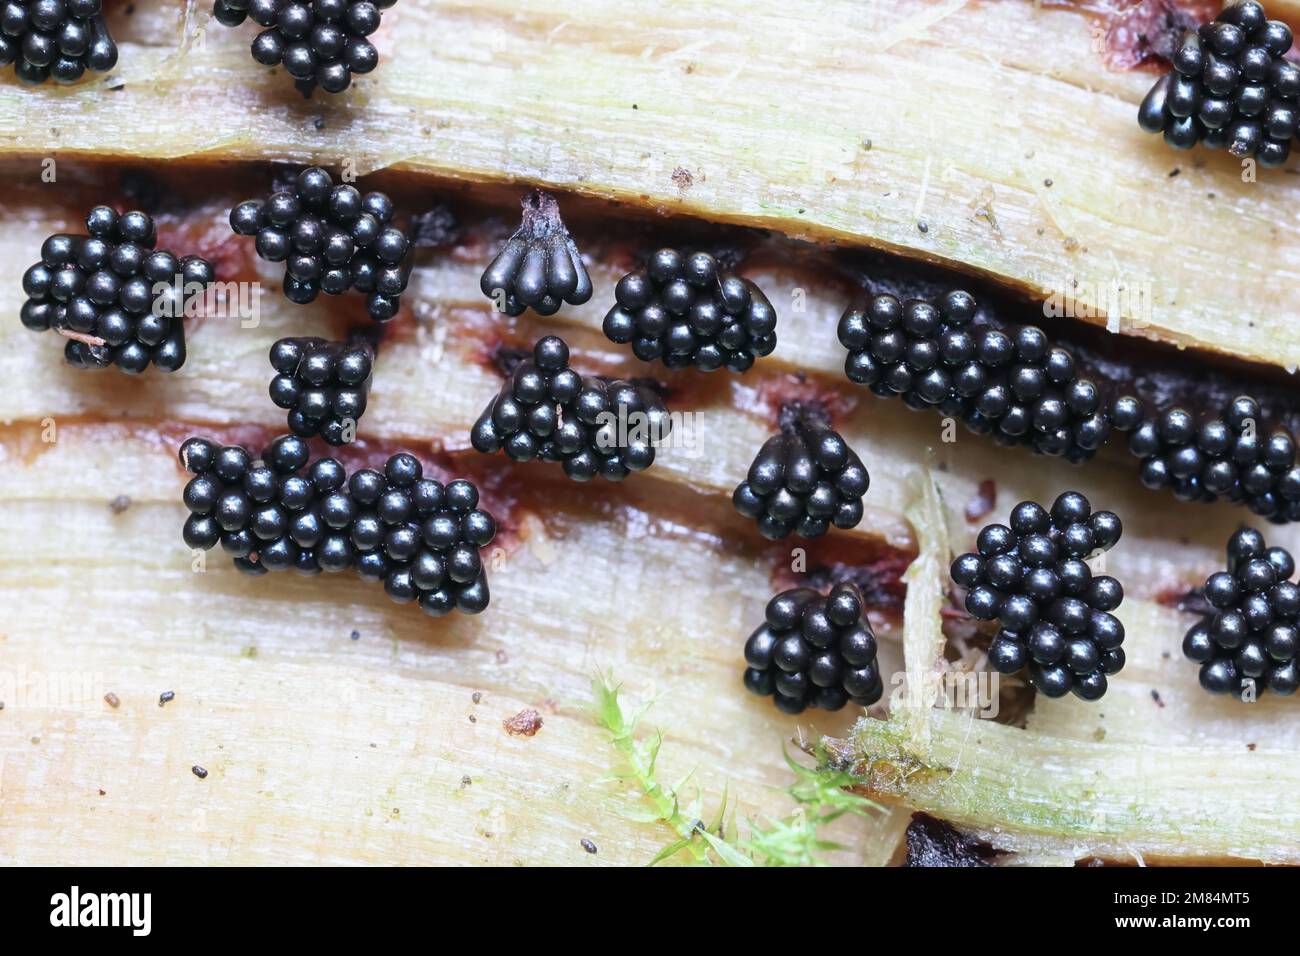 Metatrichia vesparium, commonly known as wasp nest slime mold, microscope image Stock Photo